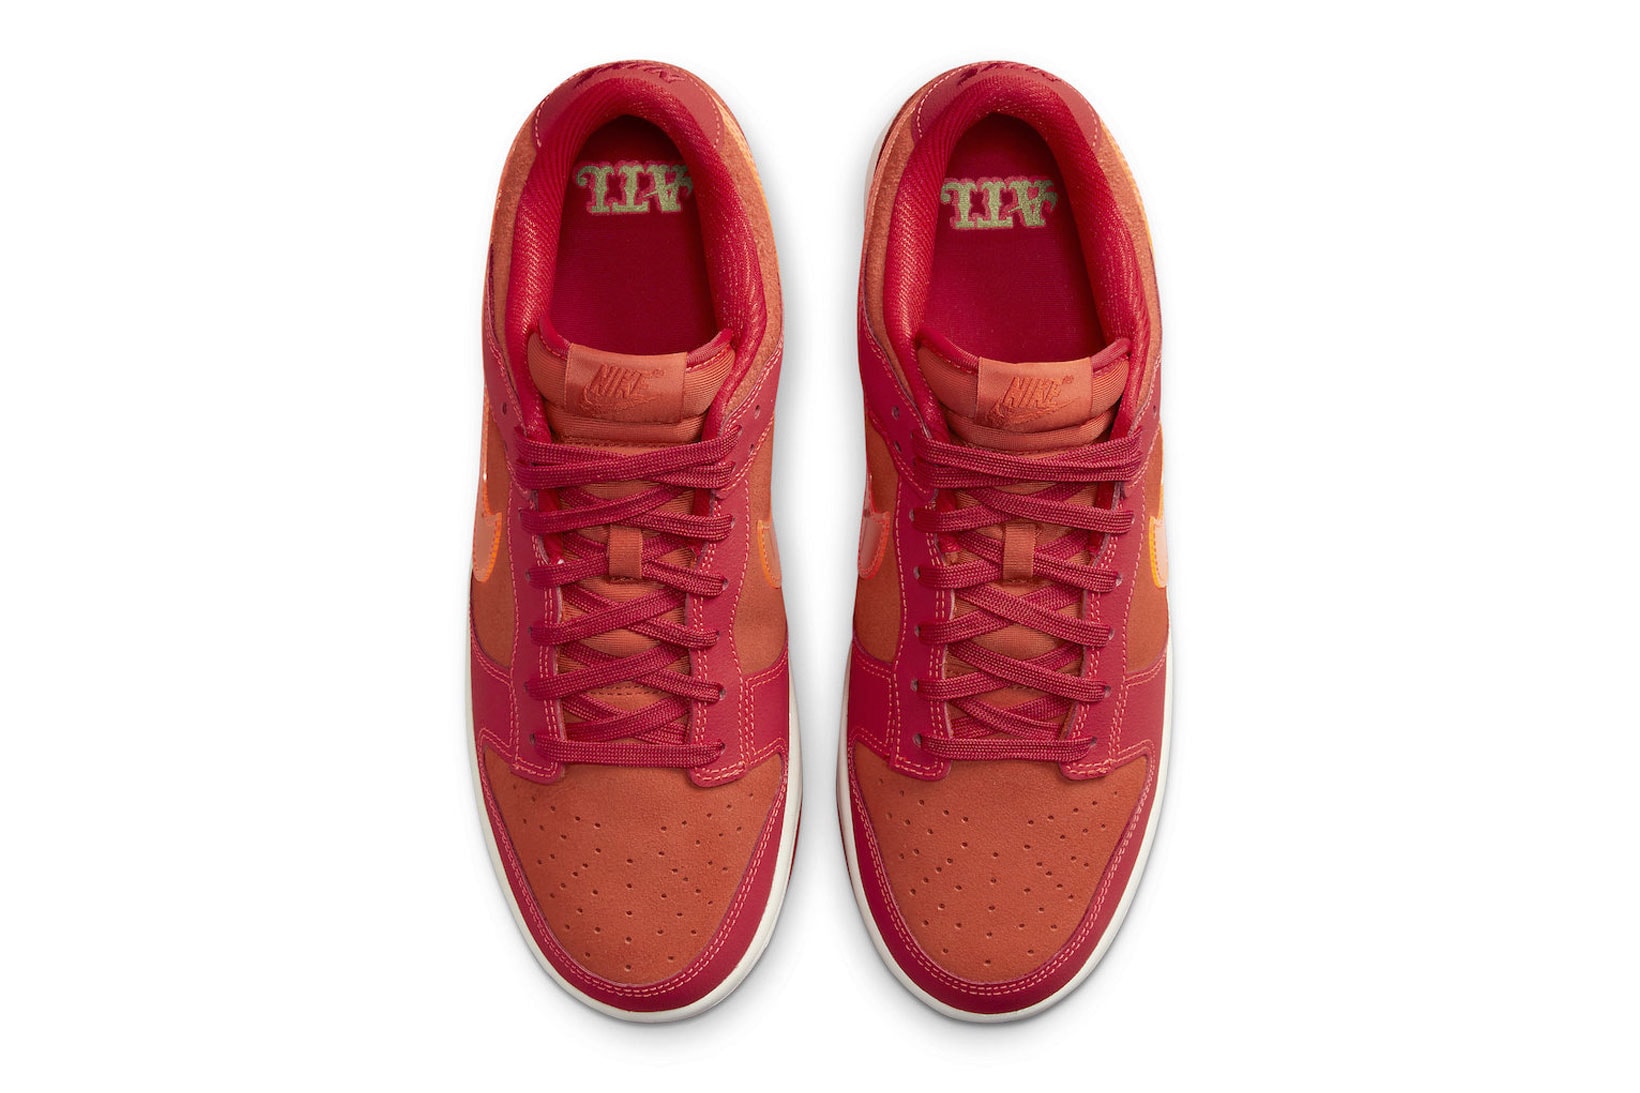 Nike Dunk Low ATL University Red Bright Crimson Orange Release Date Images